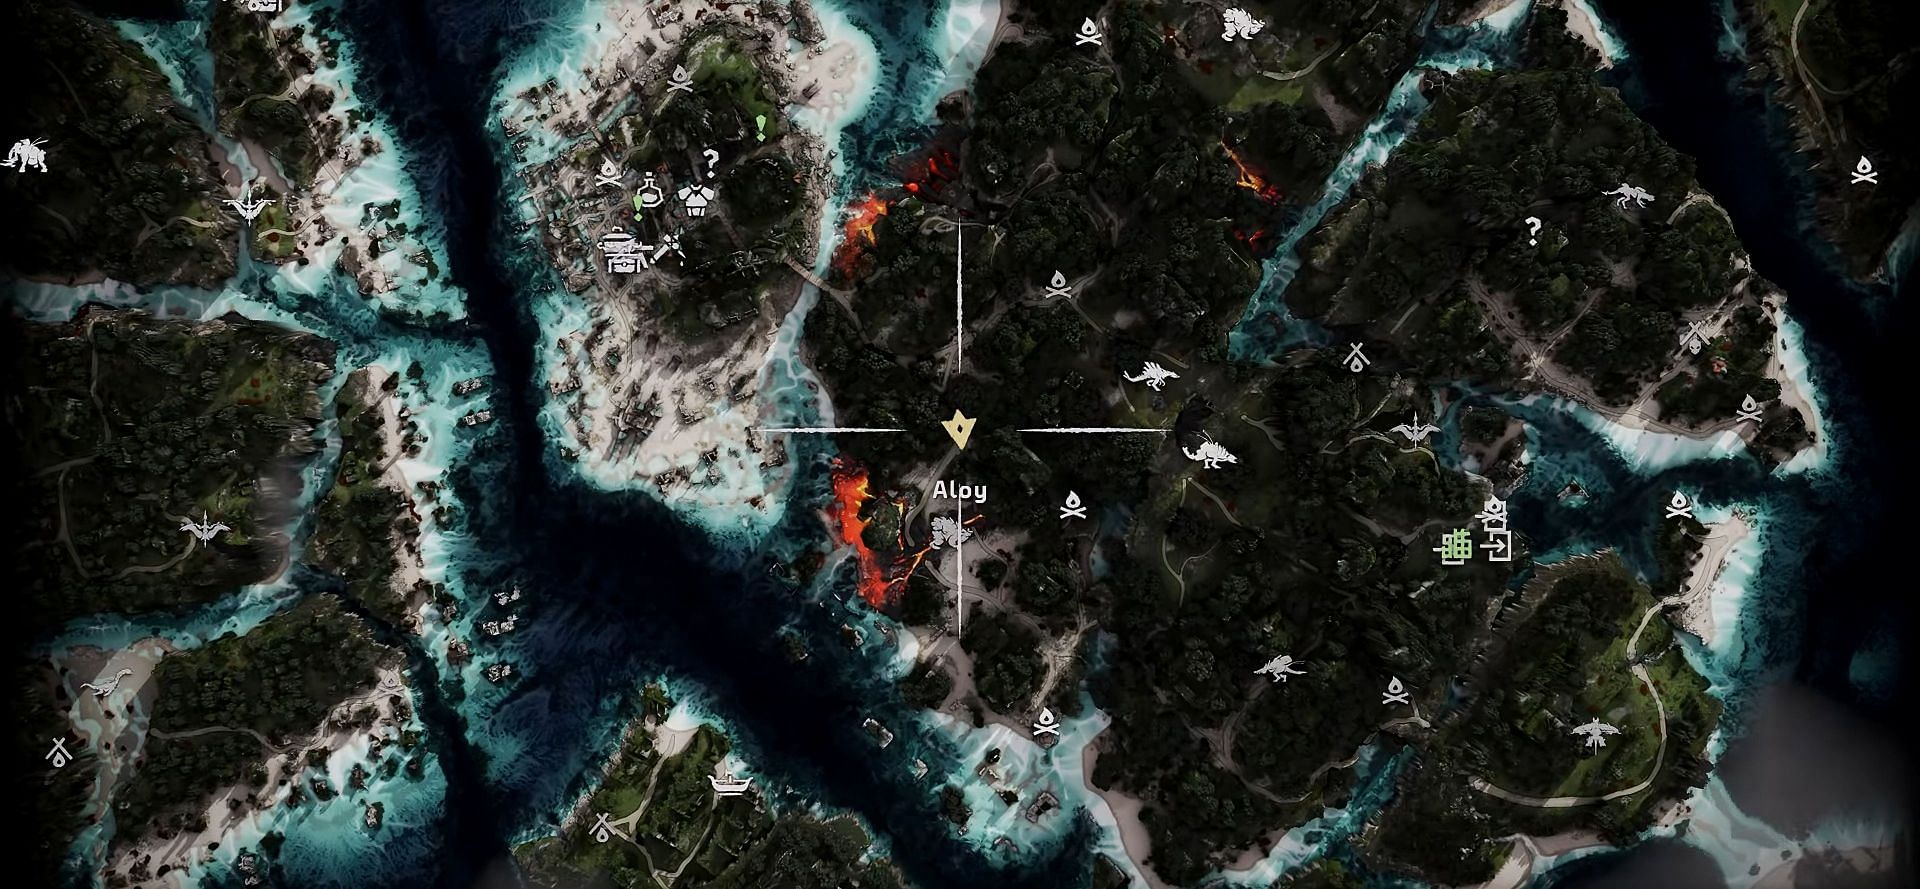 Bilegut location in map (Image via Guerrilla Games)